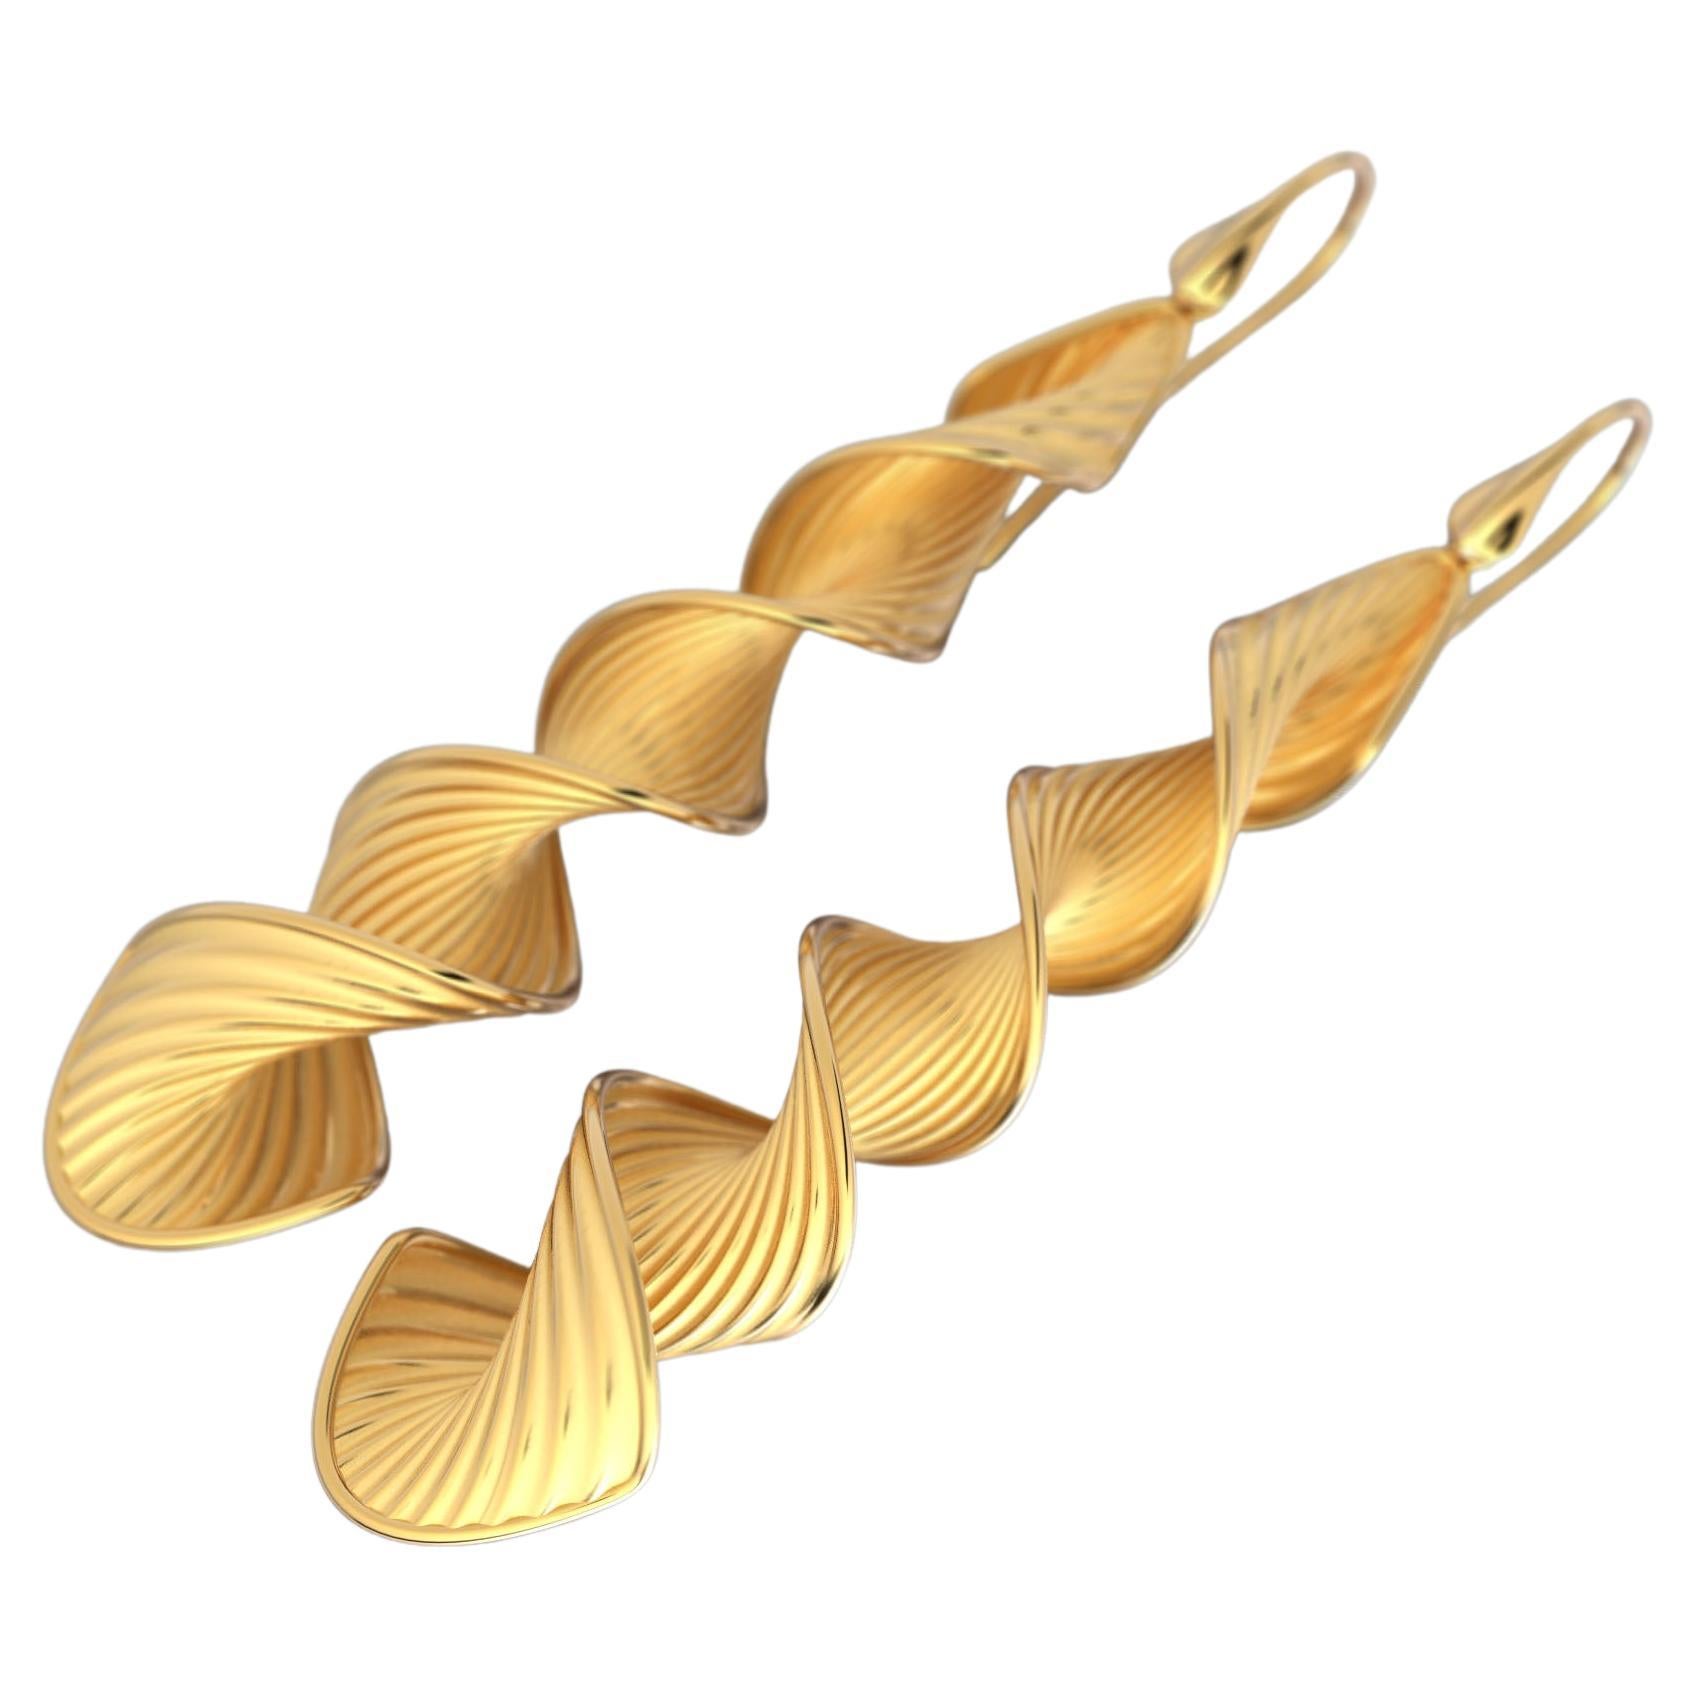 Oltremare Gioielli 14k Gold-Ohrringe, lange Tropfenohrringe, hergestellt in Italien